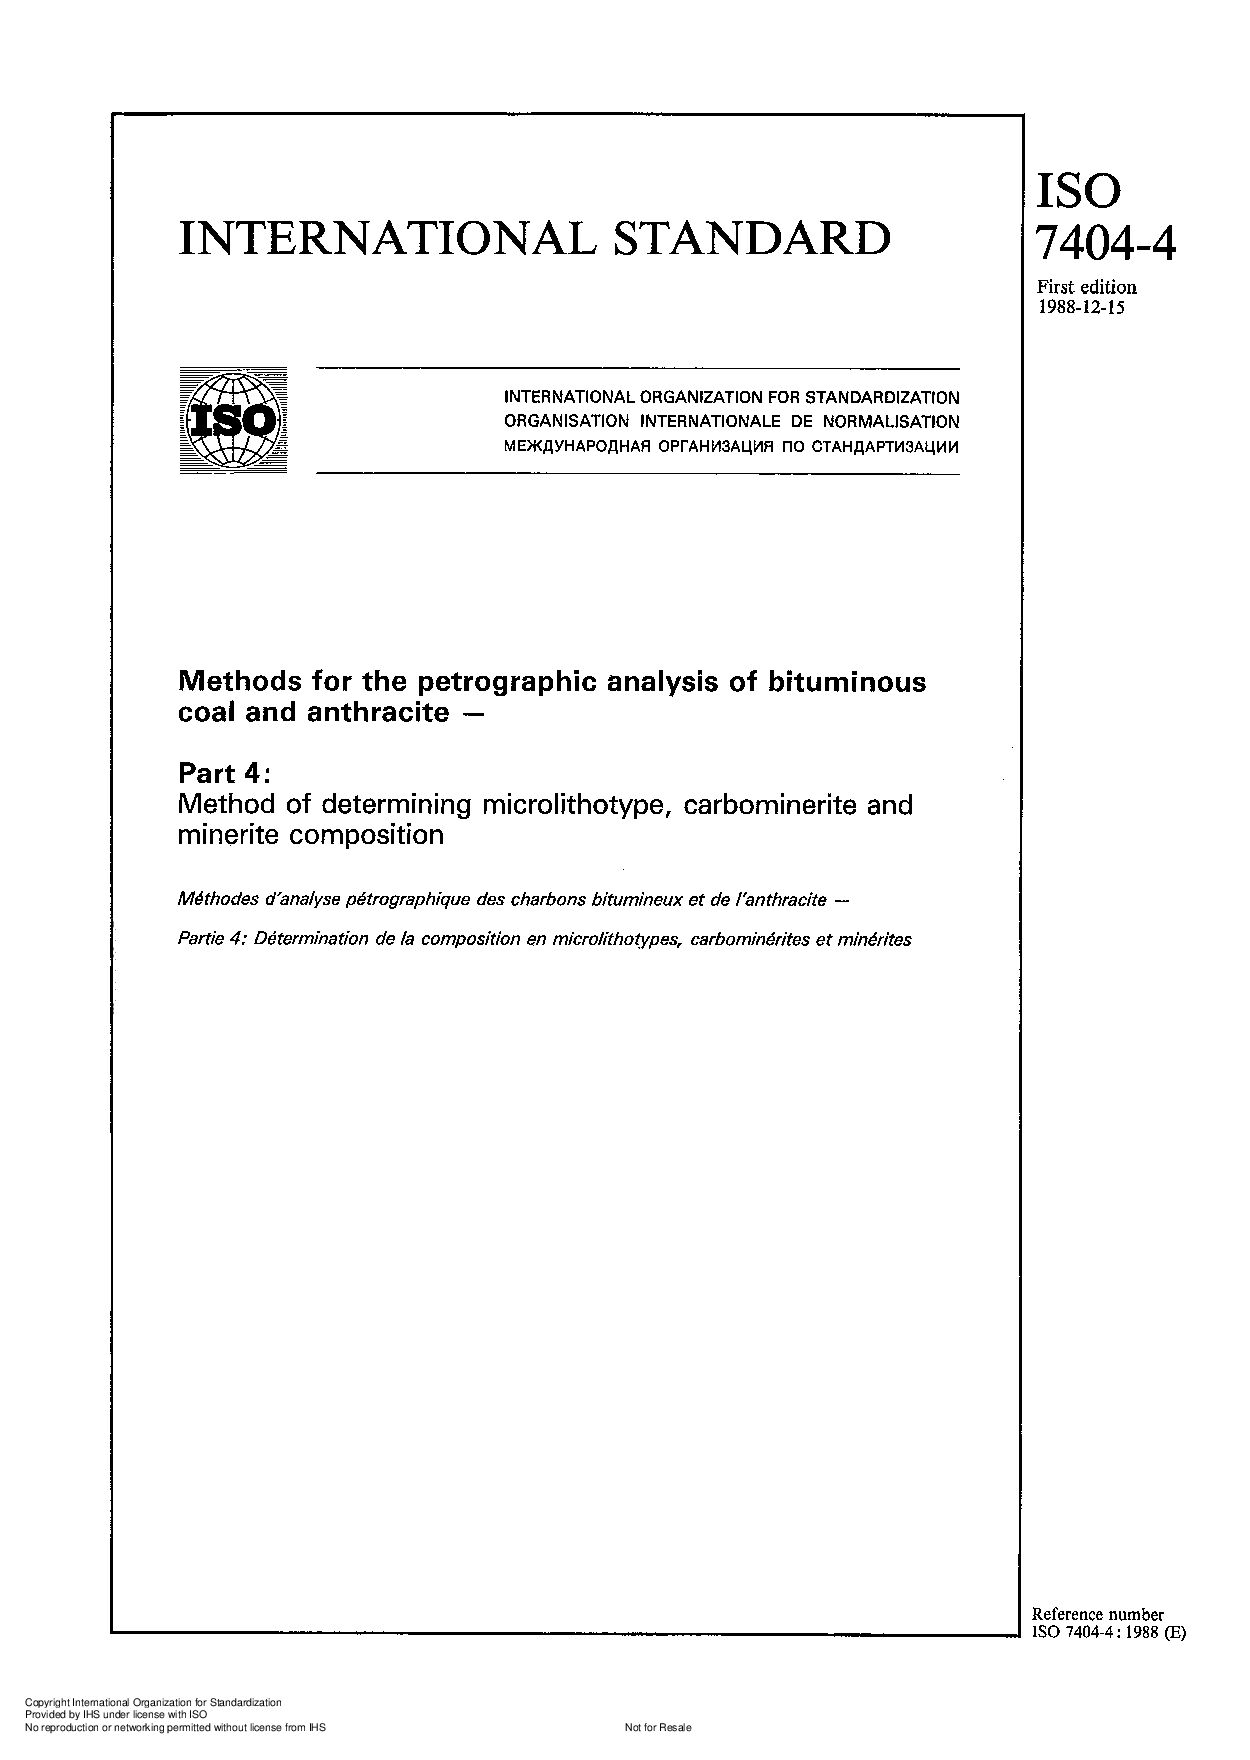 ISO 7404-4:1988封面图